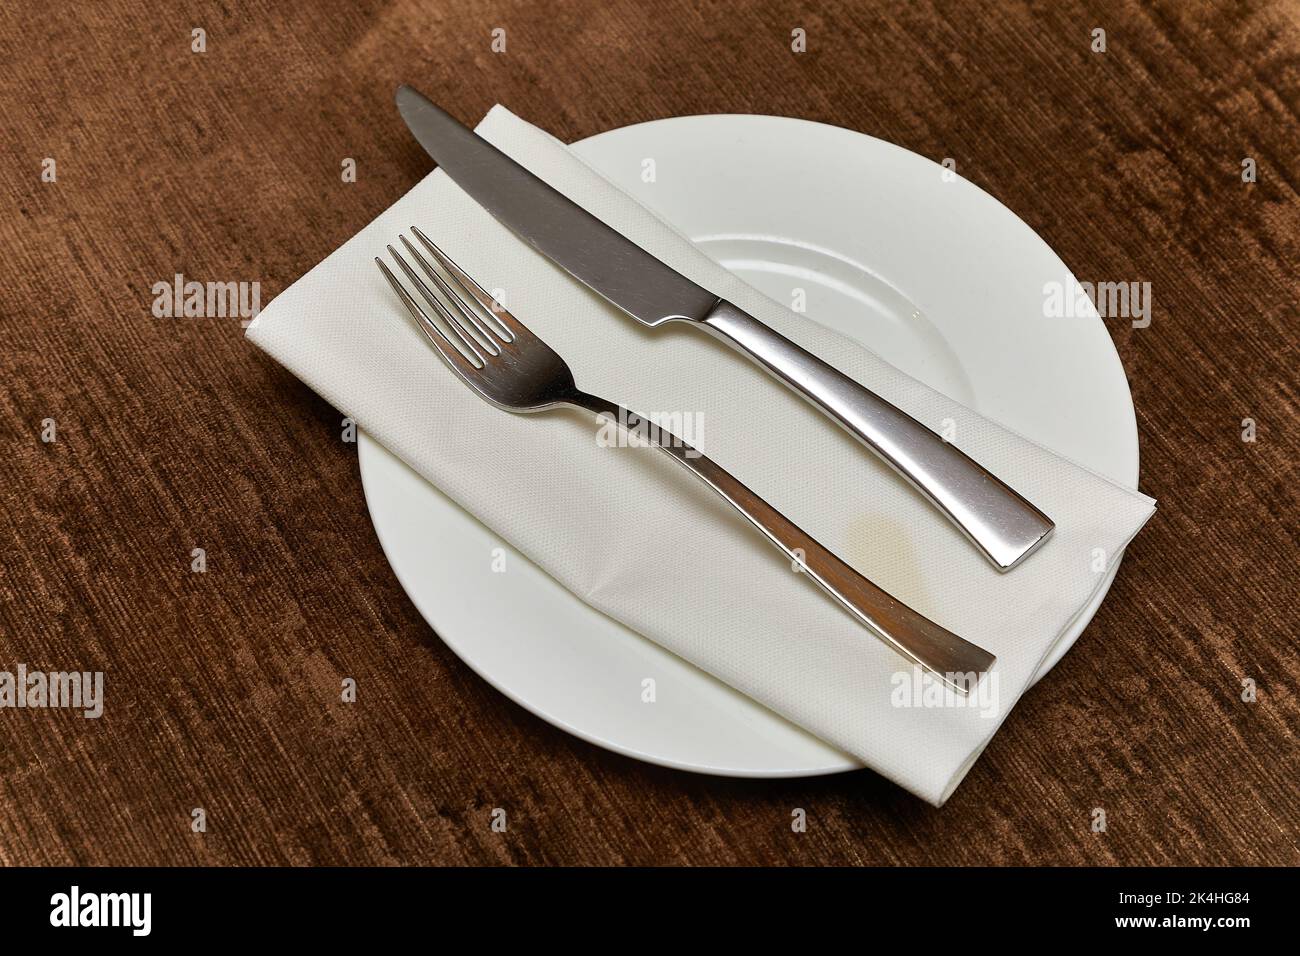 Cutlery on a teble Stock Photo